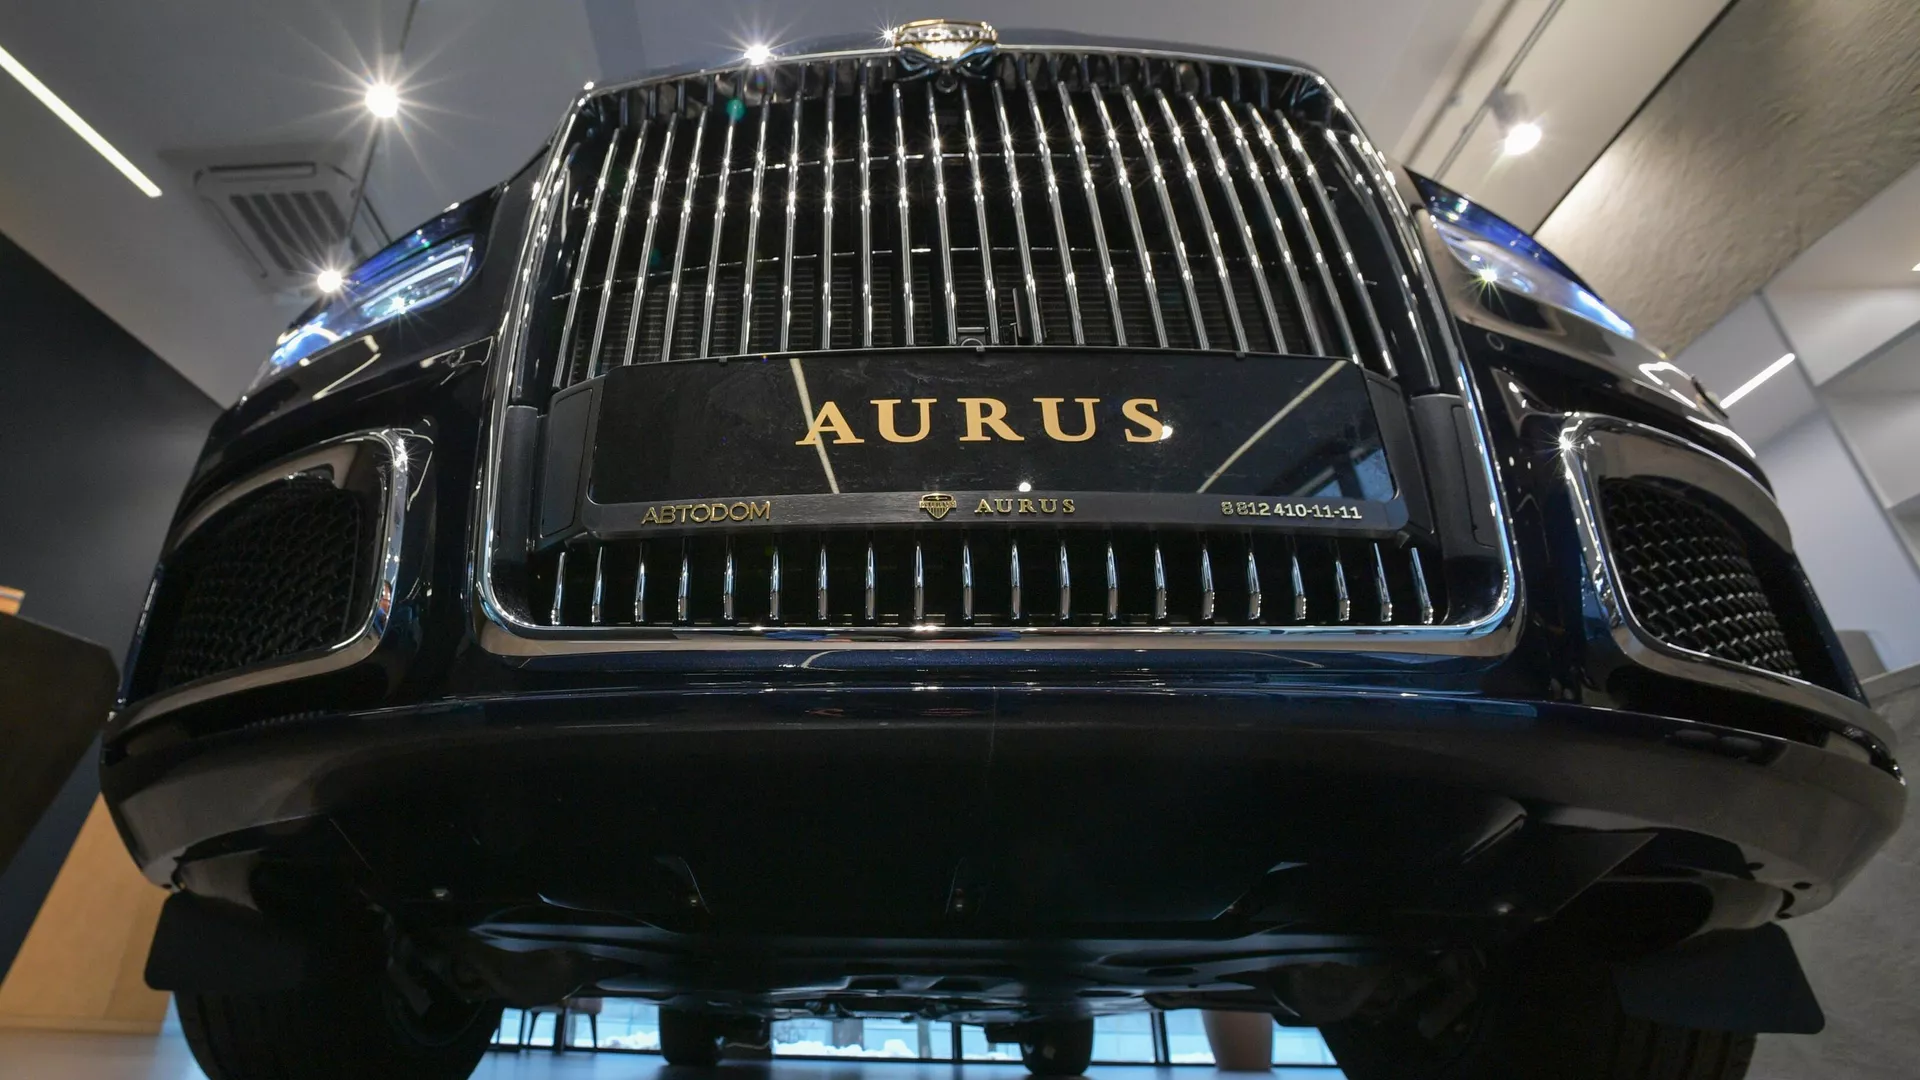 Russiýanyň “Aurus” kompaniýasy Sankt-Peterburgdaky öňki “Toyota” zawodynda biznes derejeli awtoulag öndürip başlamagy meýilleşdirýär